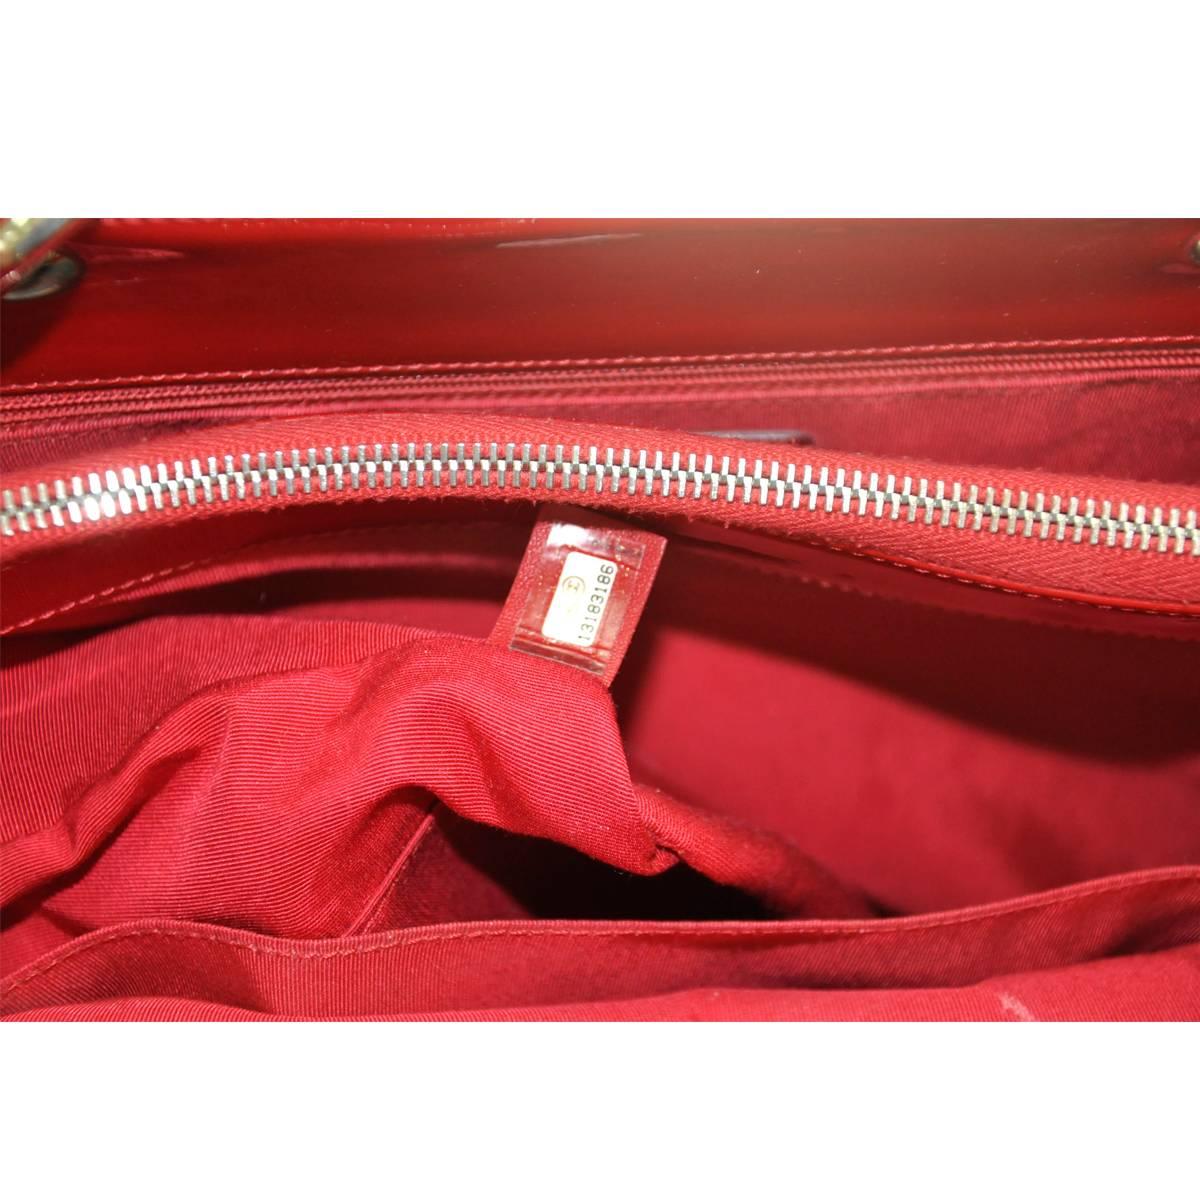 Chanel Red Patent Leather Grand Shopper Tote GST Handbag 6